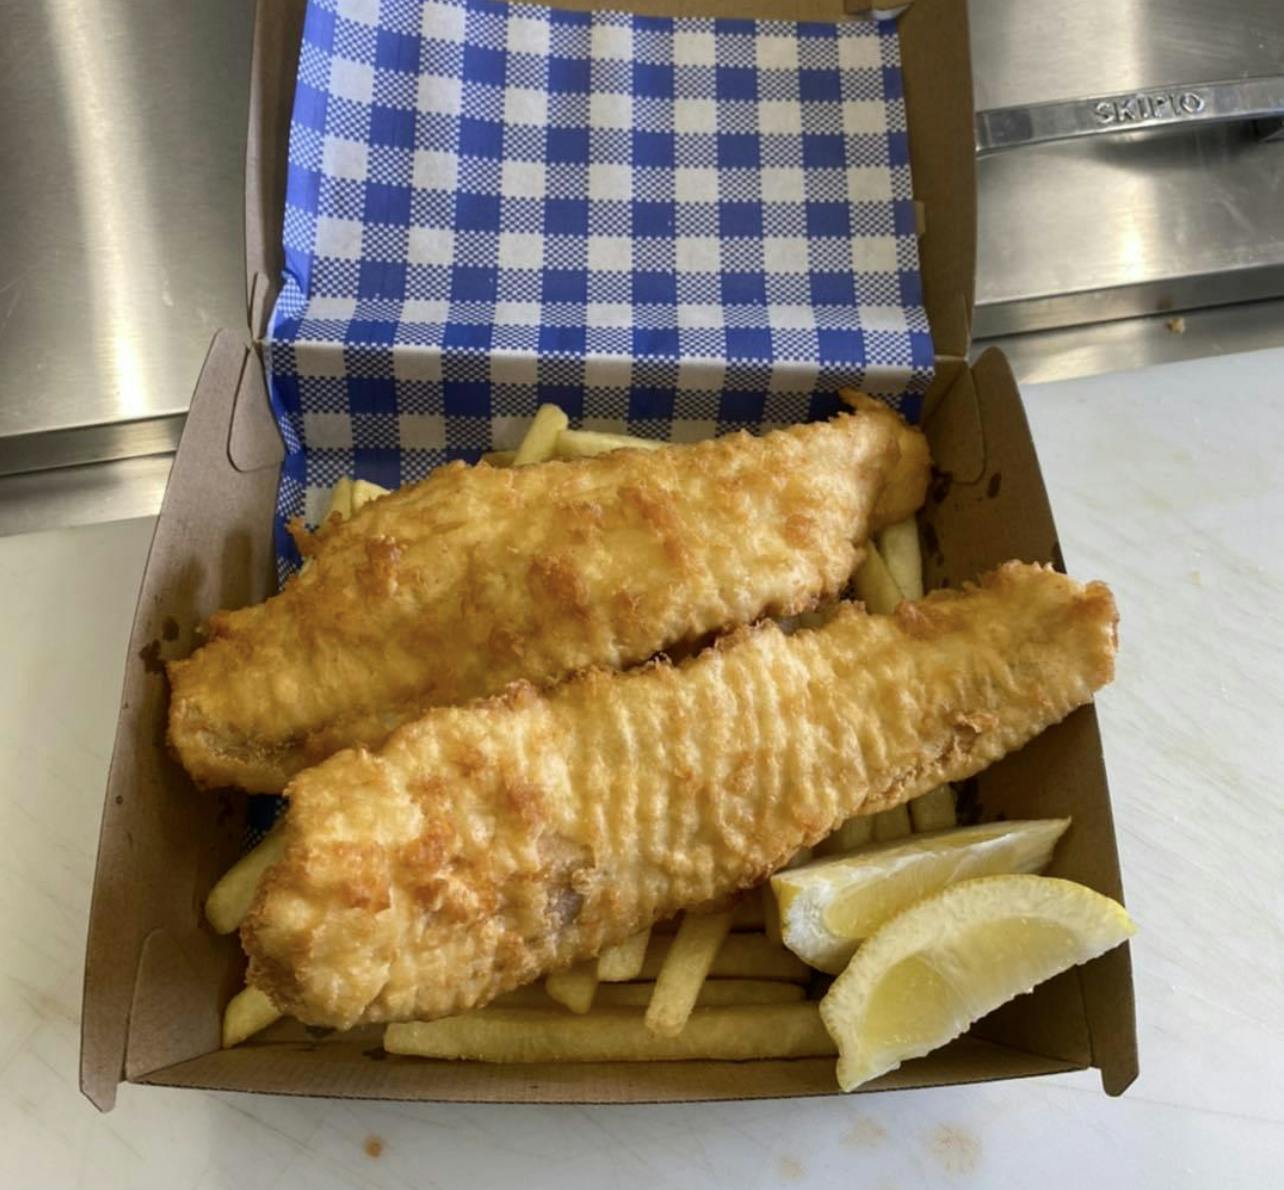 Port Albert Fresh Seafoods serve takeaway fish & chips too